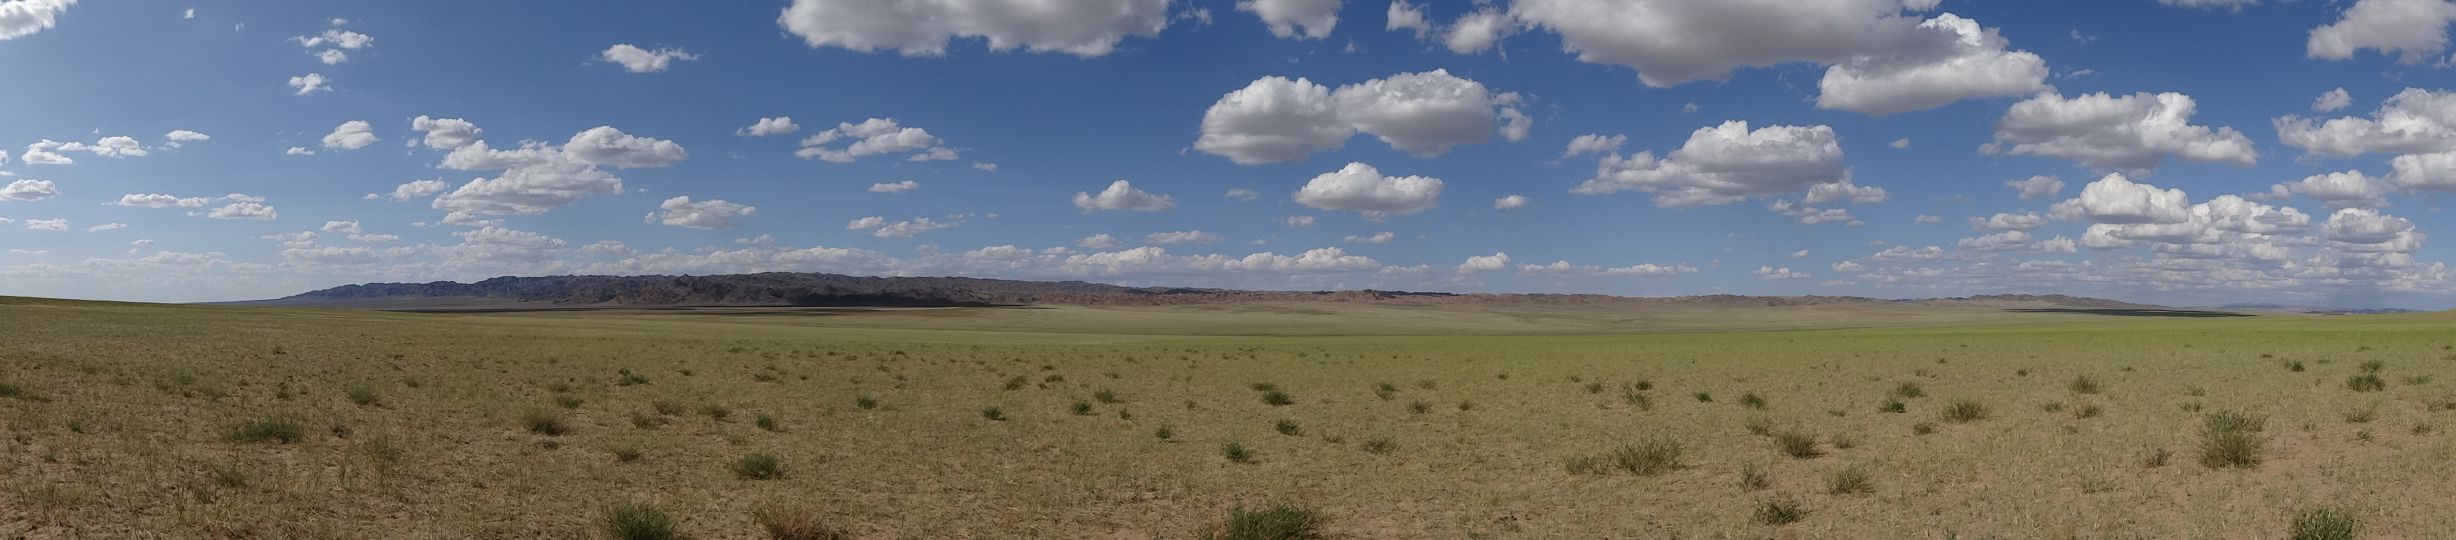 emptiness in the Gobi Desert